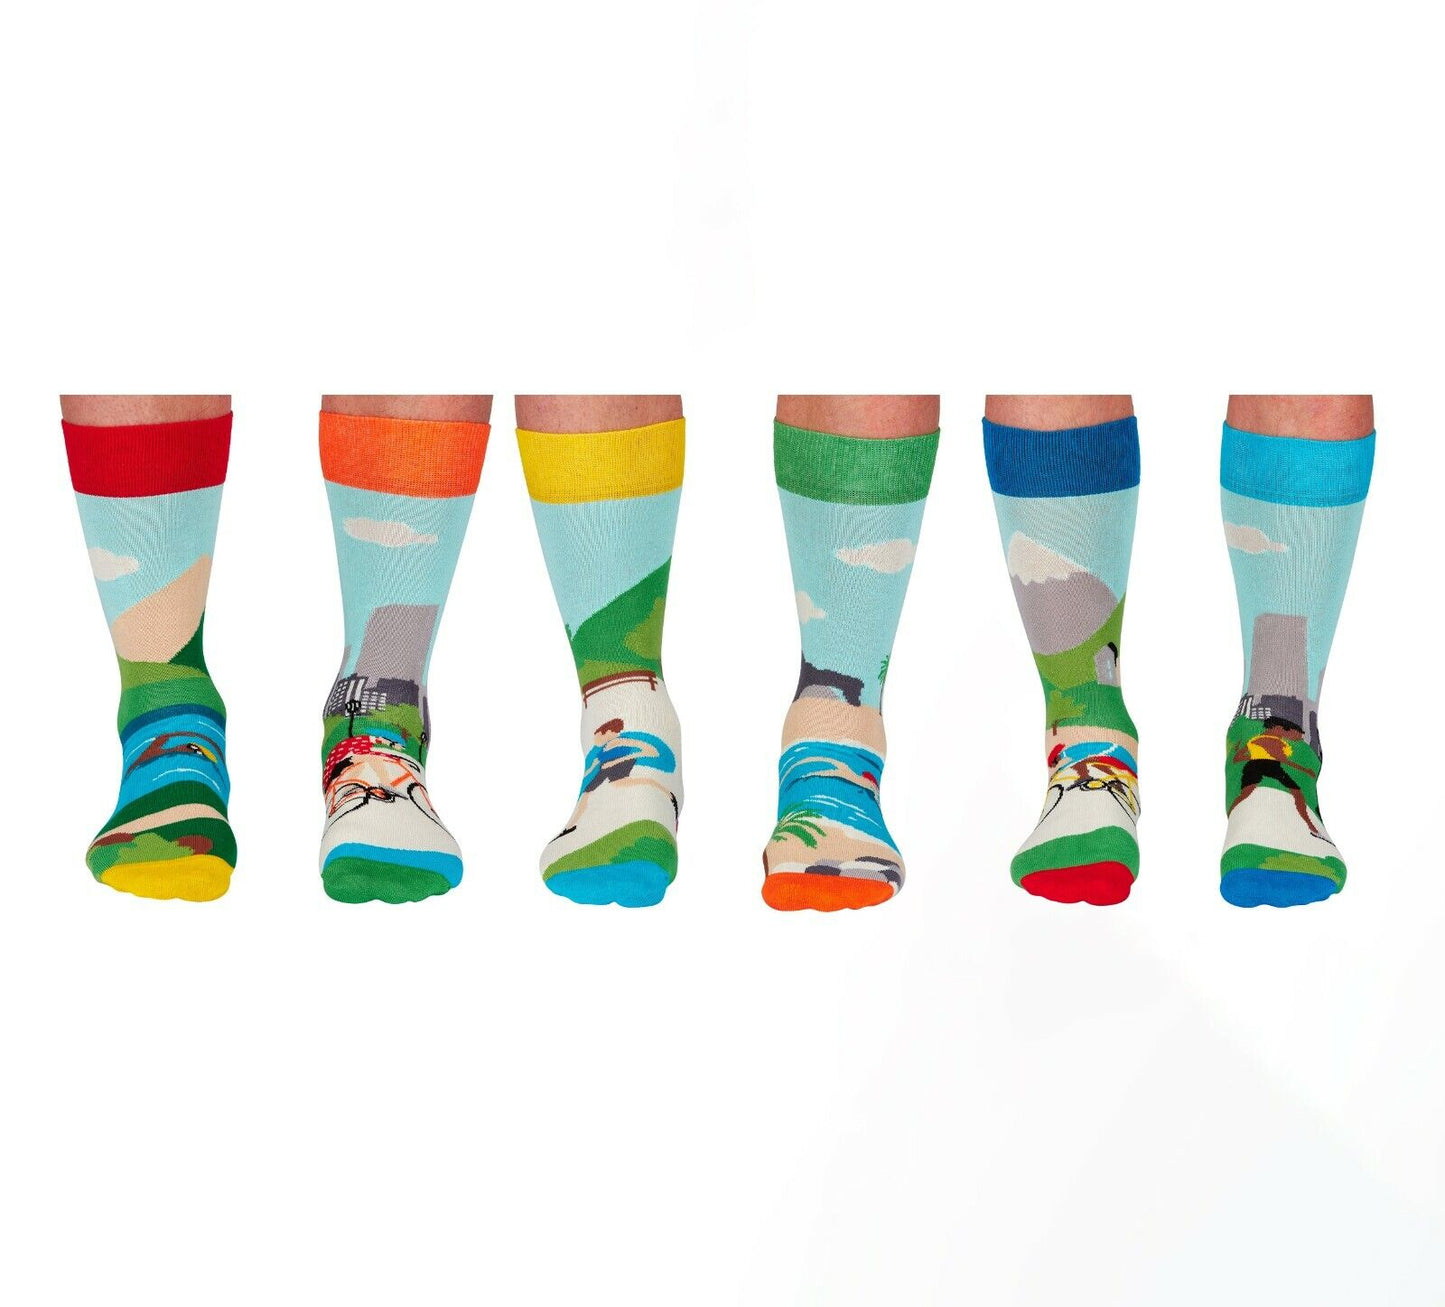 United Oddsocks - Men's Sockathlon Socks UK 6 - 11